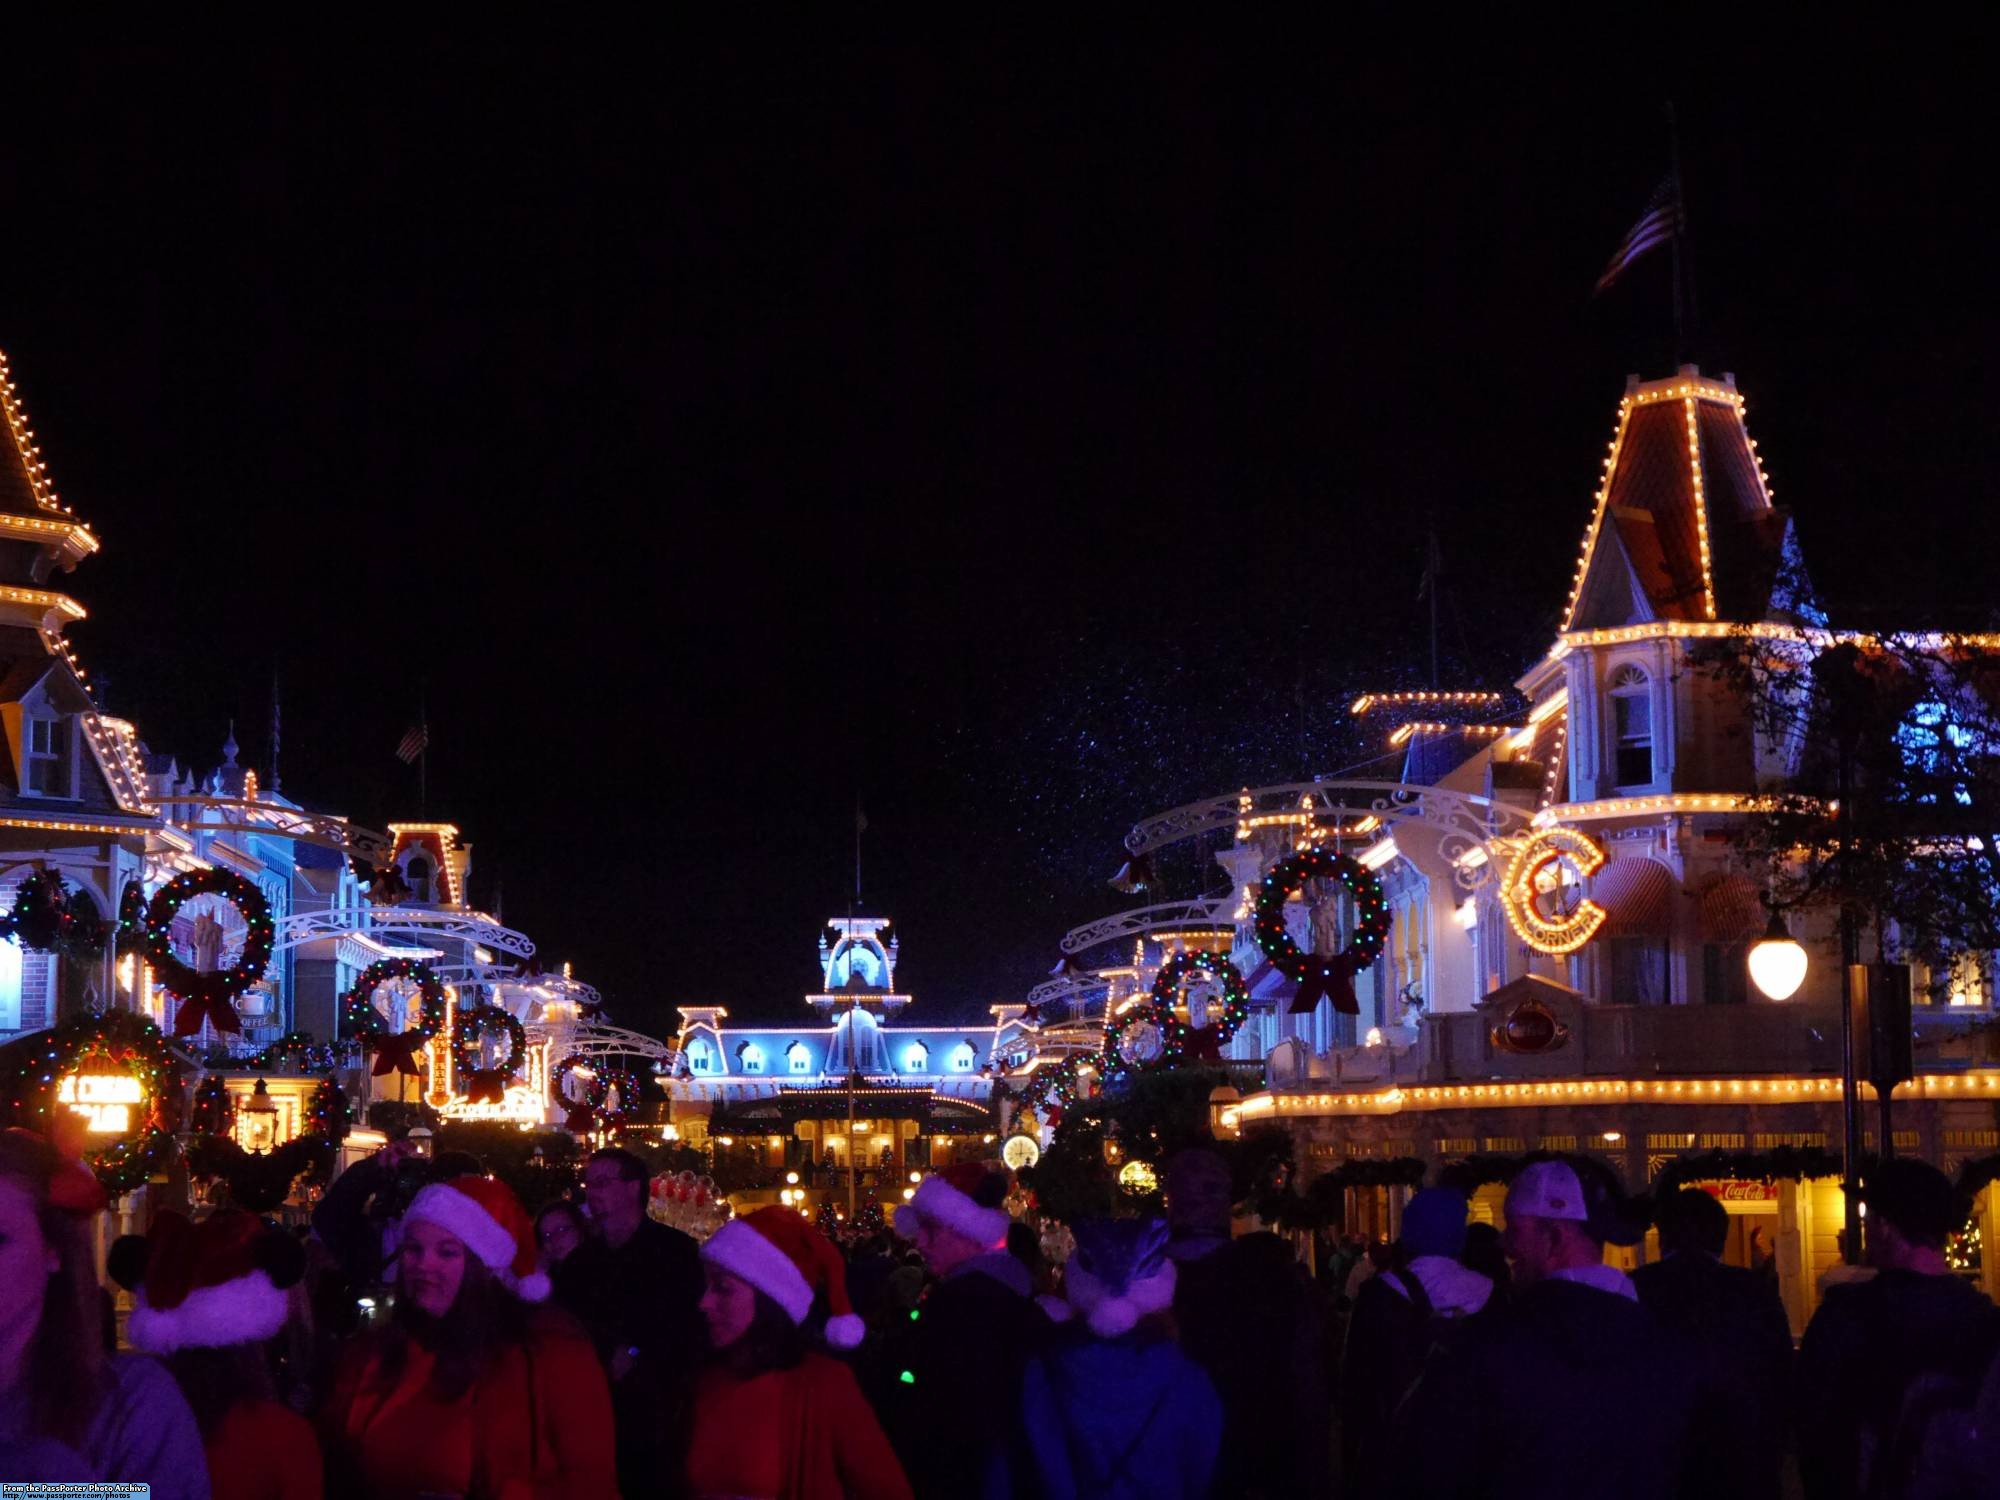 Enjoy Mickey's Very Merry Christmas Party at the Magic Kingdom | PassPorter.com